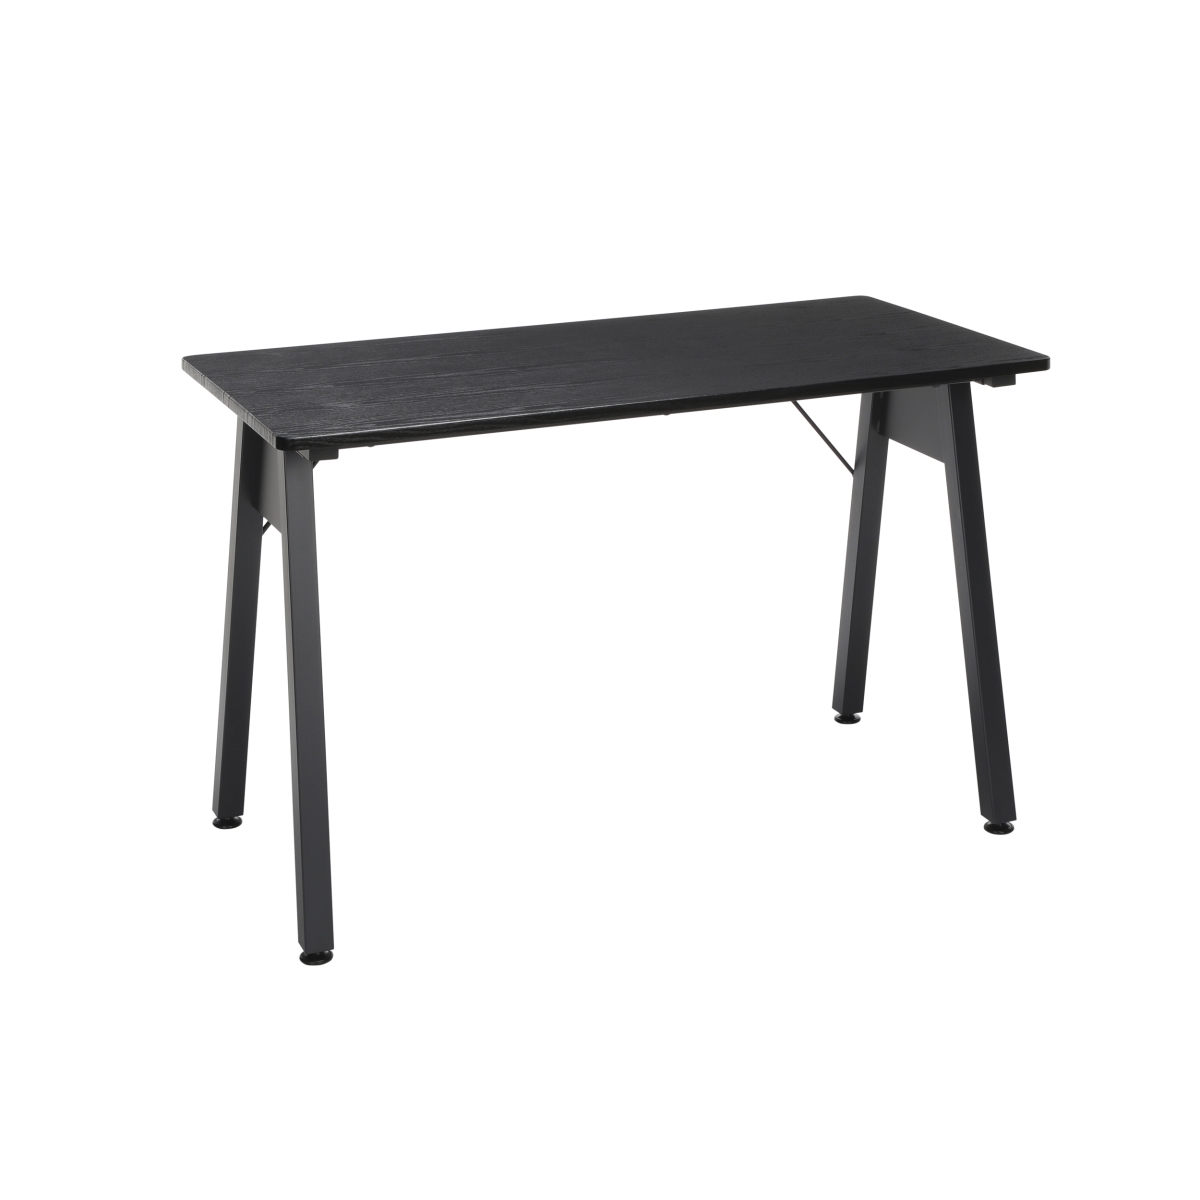 Ess-1050-blk-blk 48 In. Table Desk, Black Woodgrain